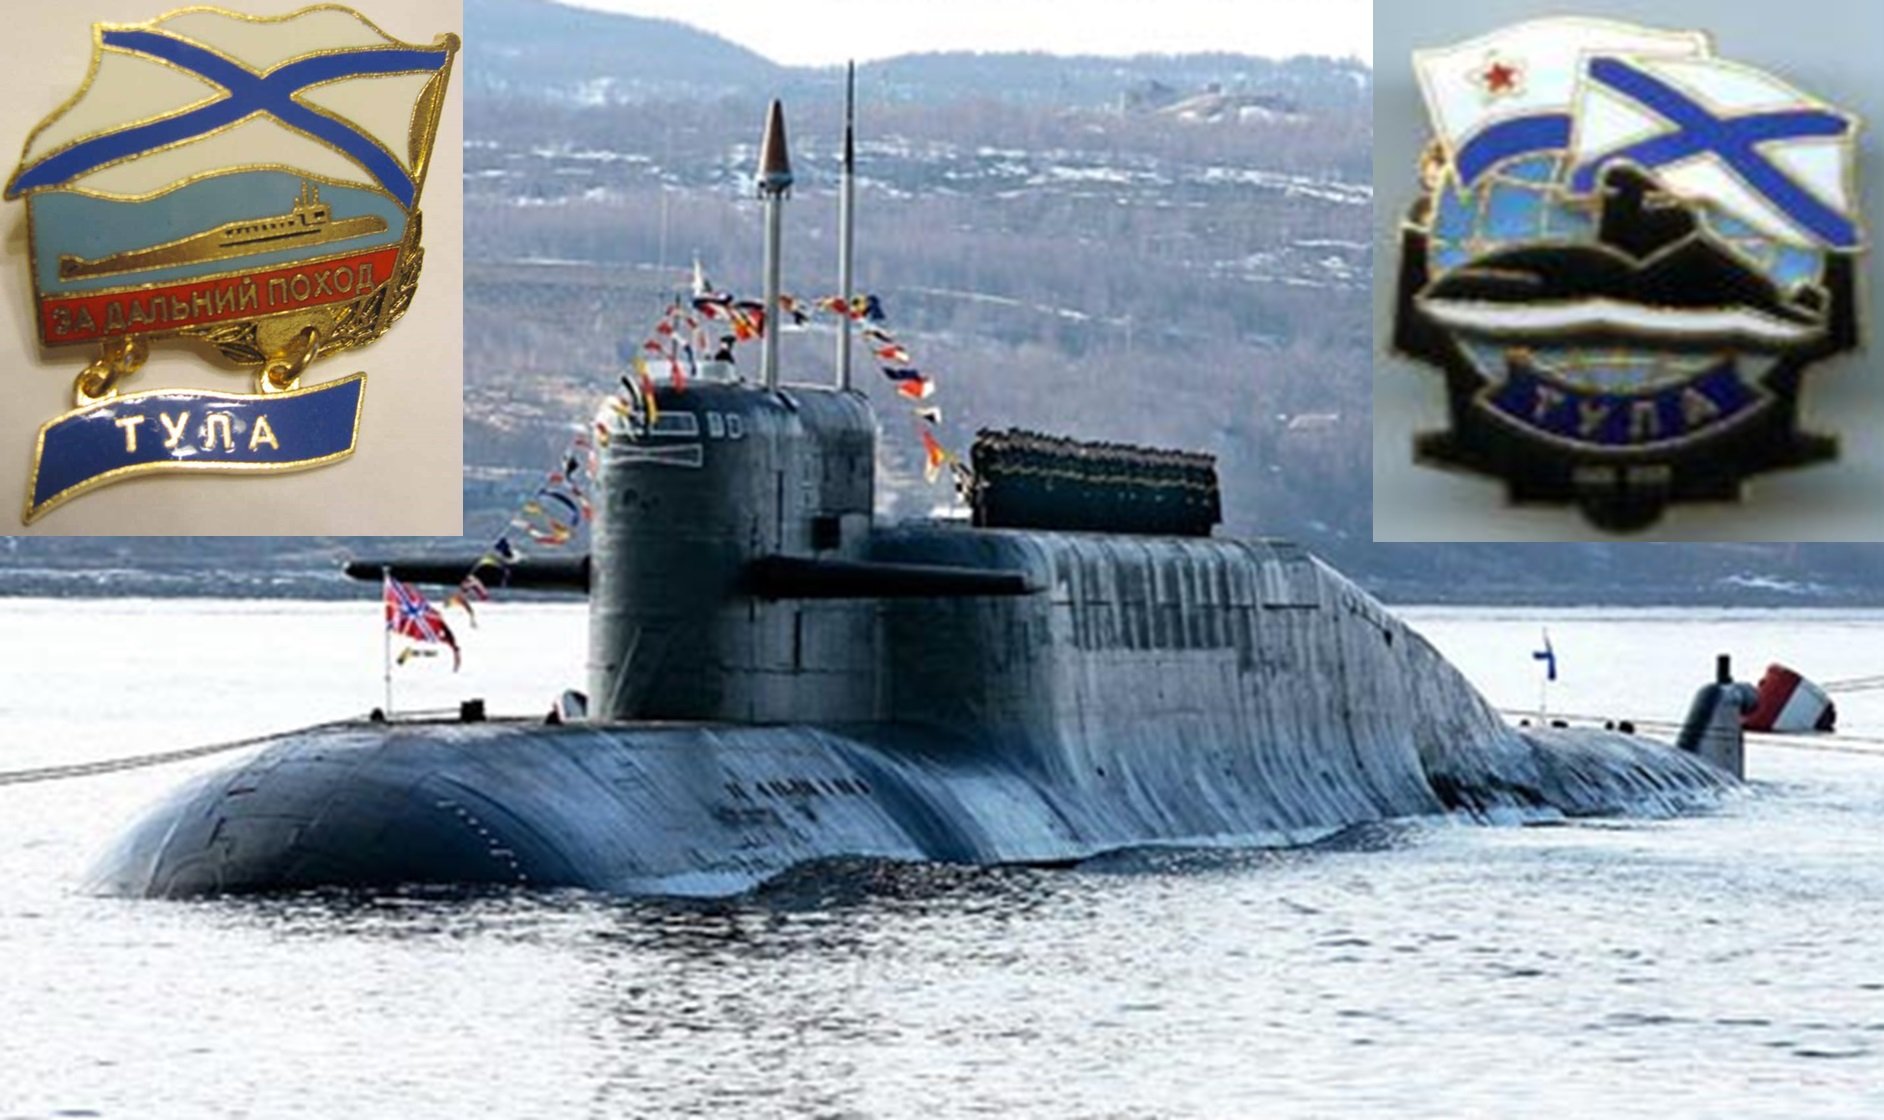 Подводный флот тихоокеанского флота. БДРМ 667 проект подводная лодка. Подводные лодки проекта 667бдрм «Дельфин». К-114 Тула. Атомная подводная лодка Тула.